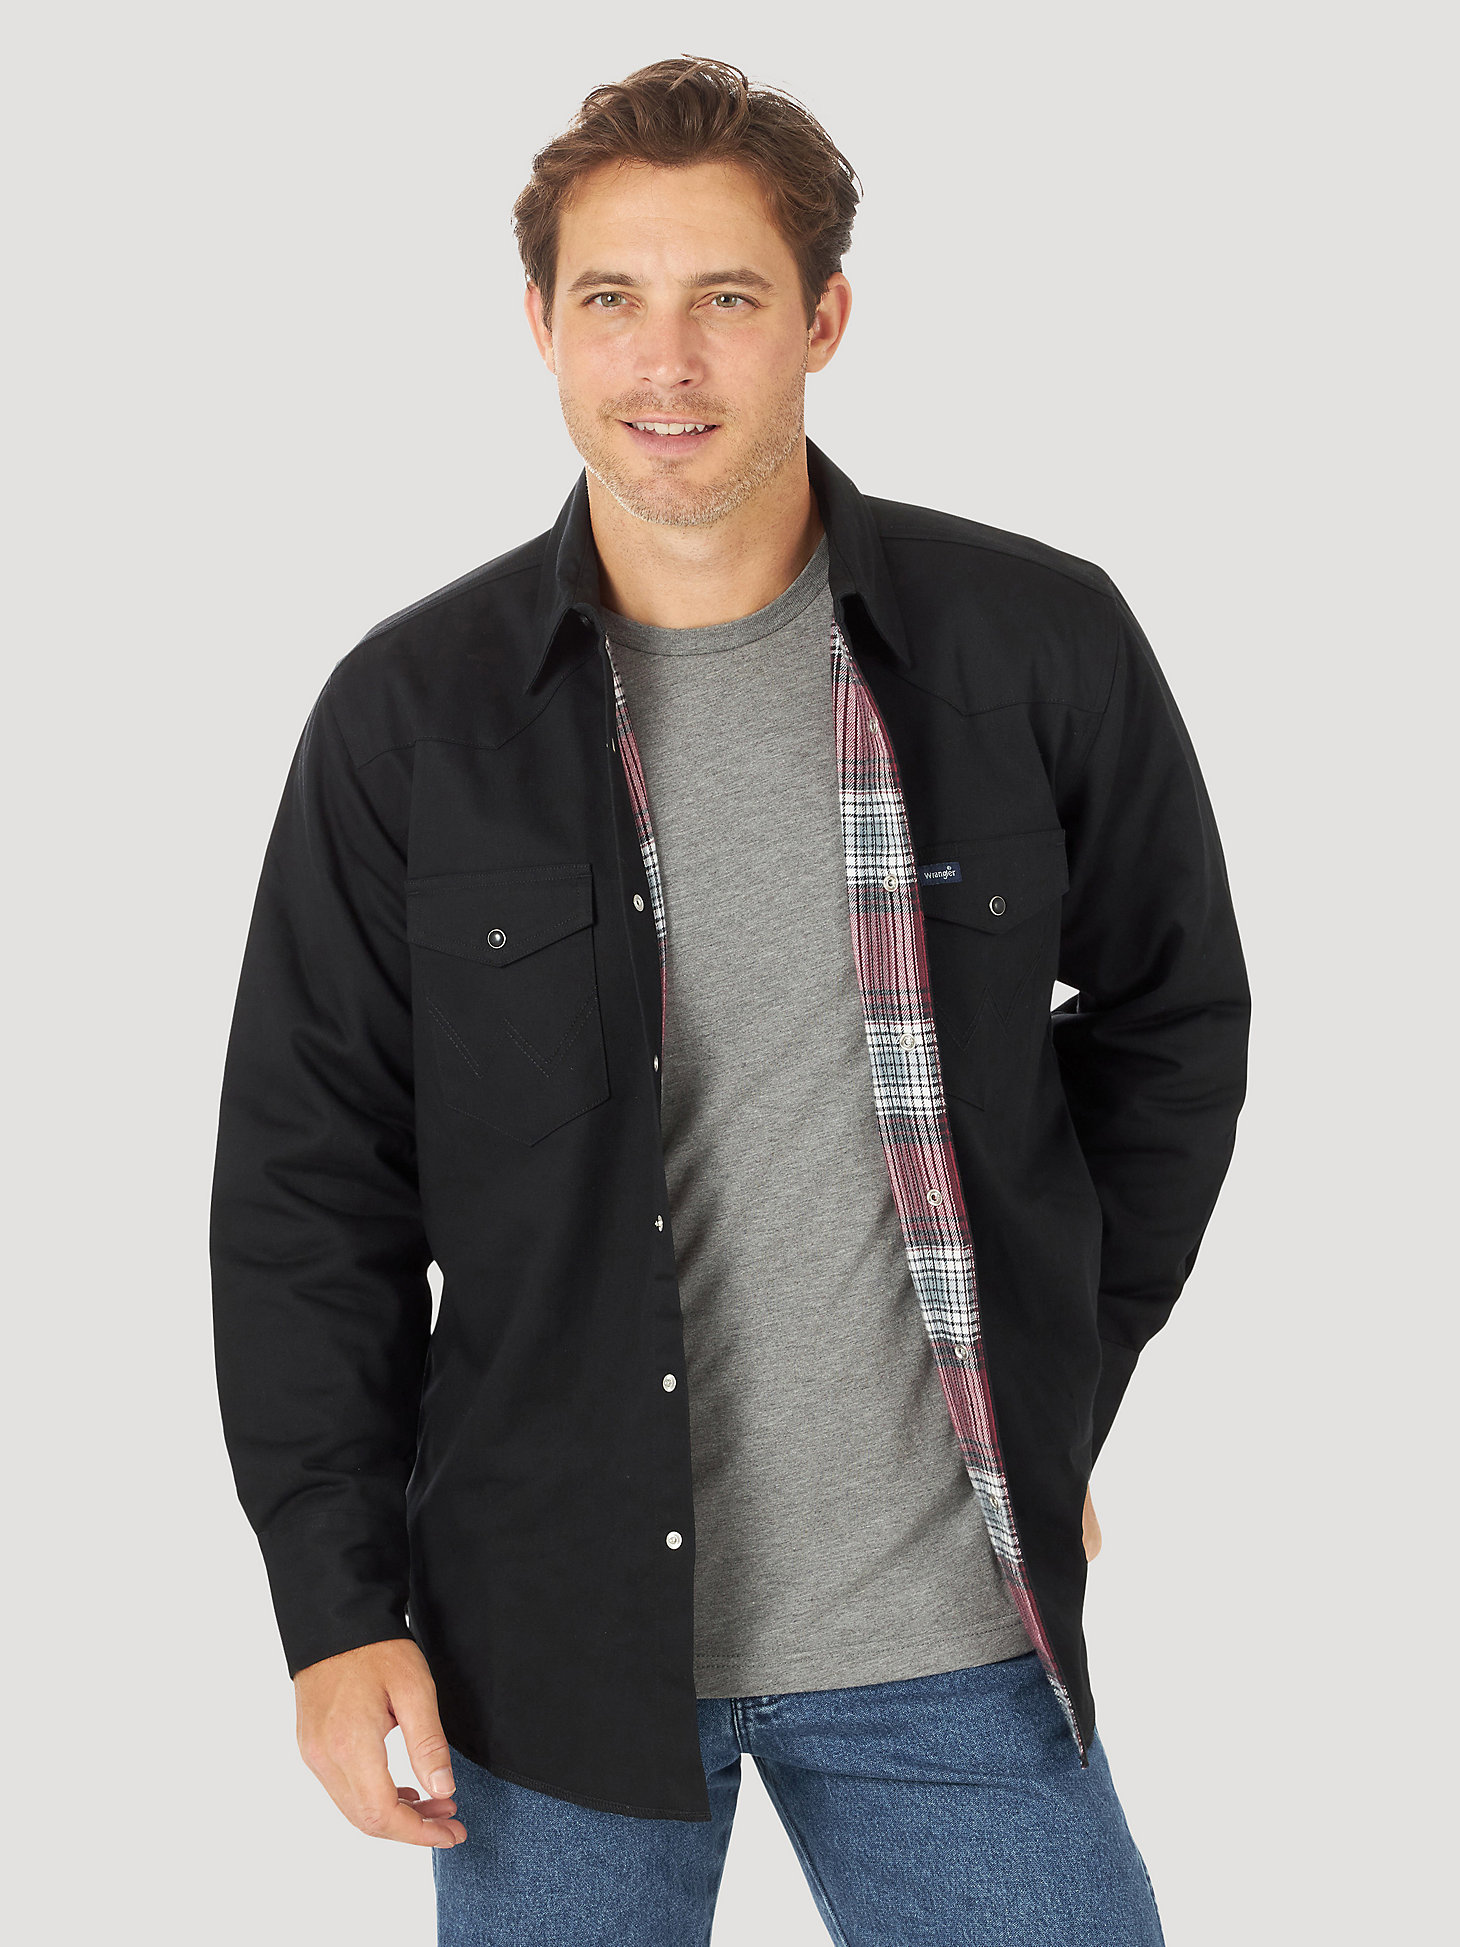 Men's Wrangler® Long Sleeve Flannel Lined Solid Work Shirt in Black/Burgundy alternative view 1